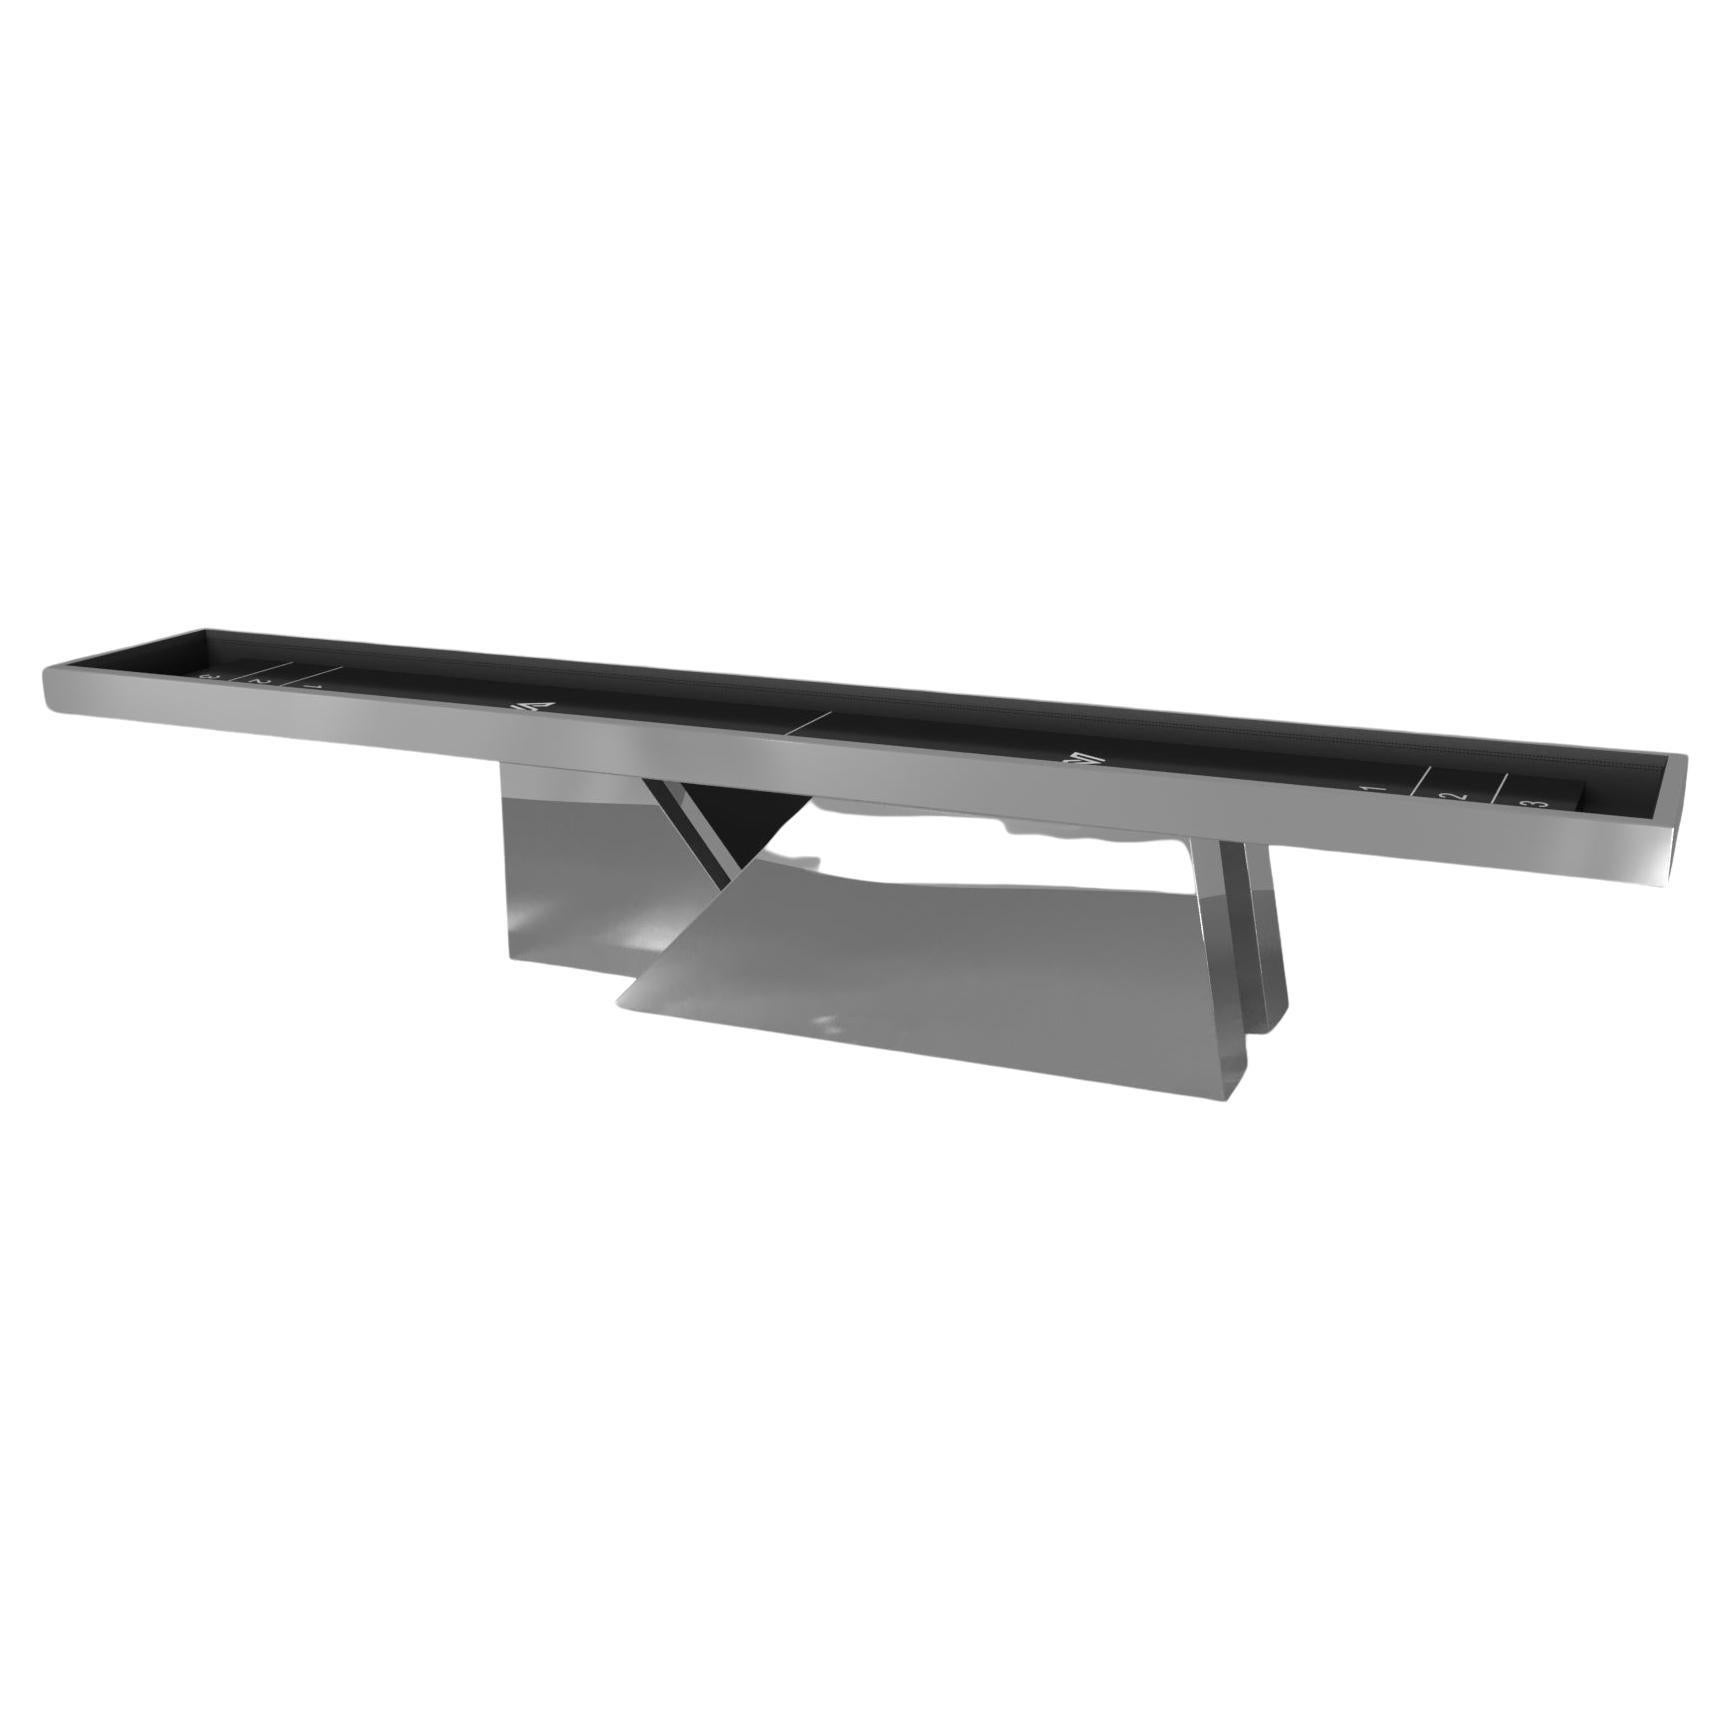 Elevate Customs Stilt Shuffleboard Tables/Stainless Steel Sheet Metal in 18'-USA